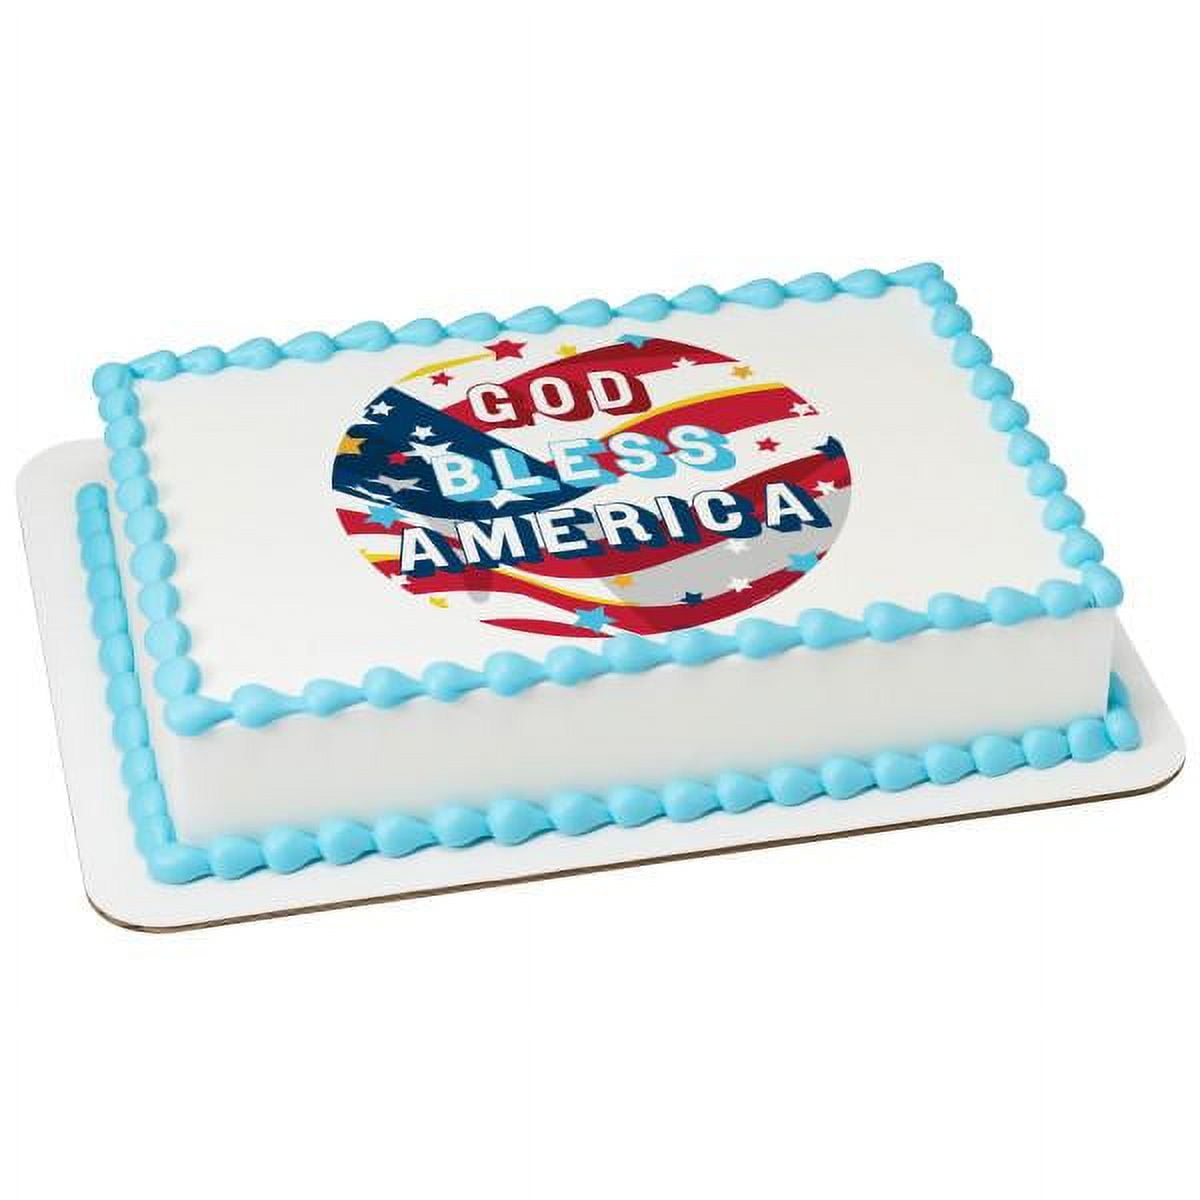 Celebrate America Variety Edible Cake Topper Image